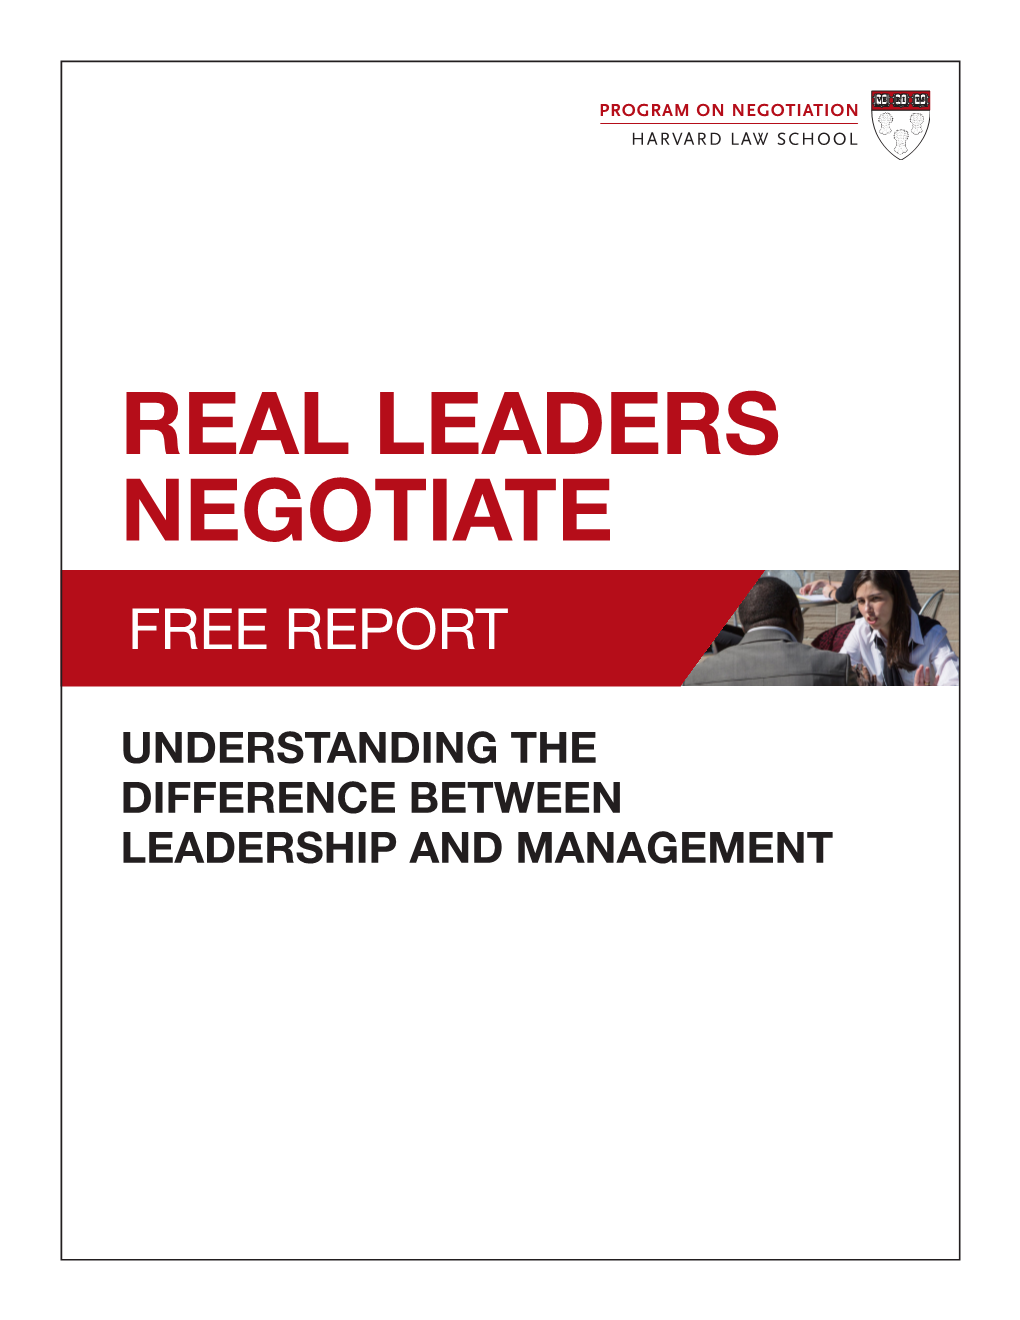 Real Leaders Negotiate Free Report